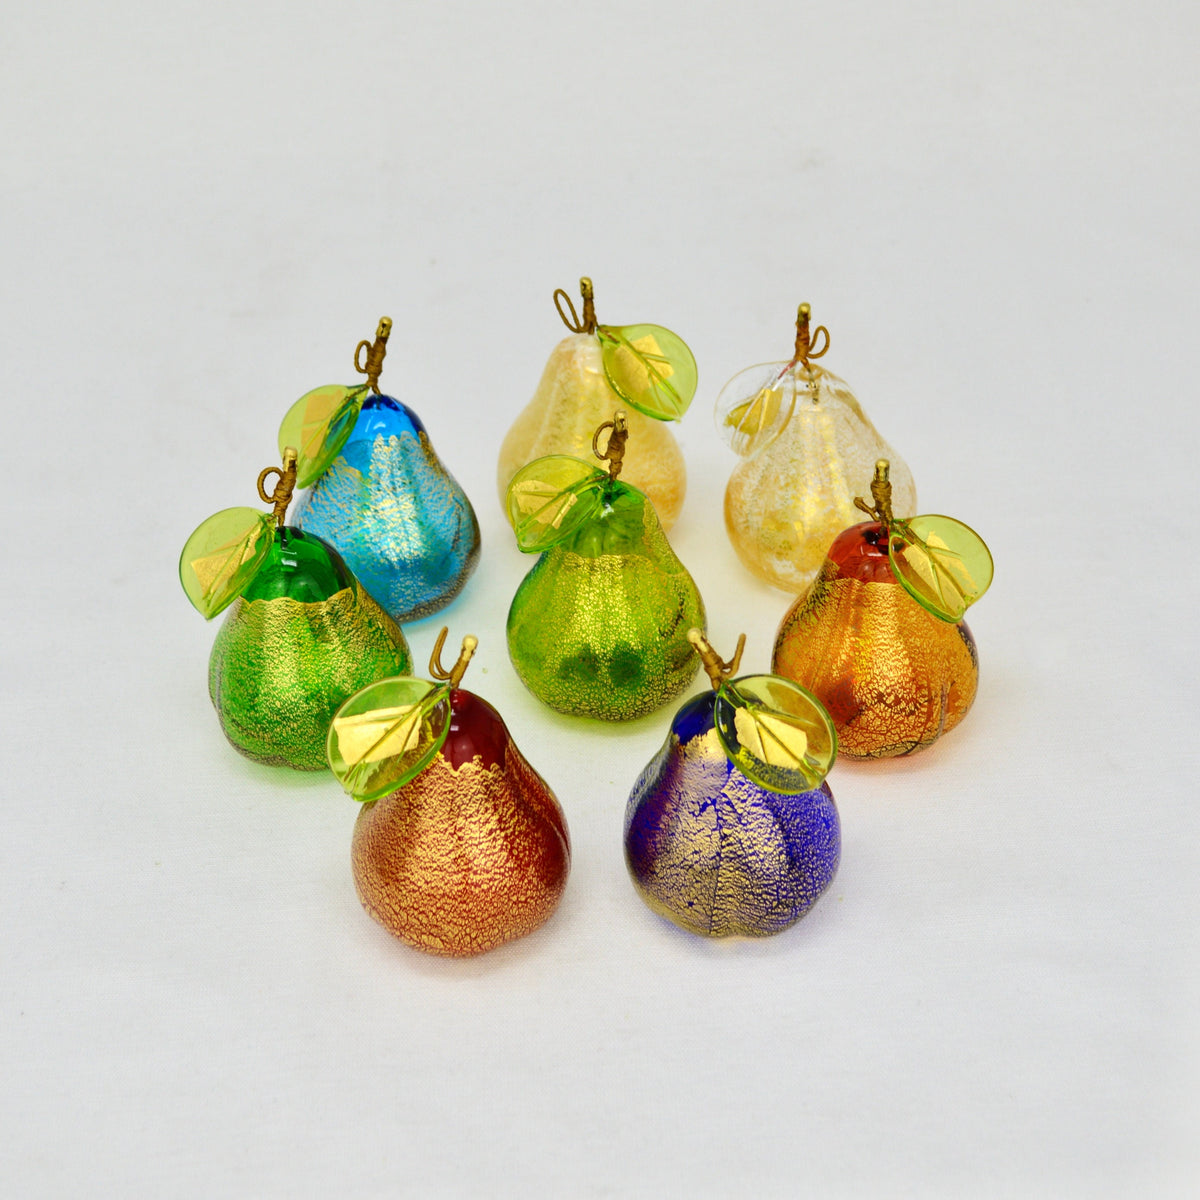 Murano Glass Blown Pear with Gold Foil, Ornament, Made In Italy, Gift Idea - My Italian Decor